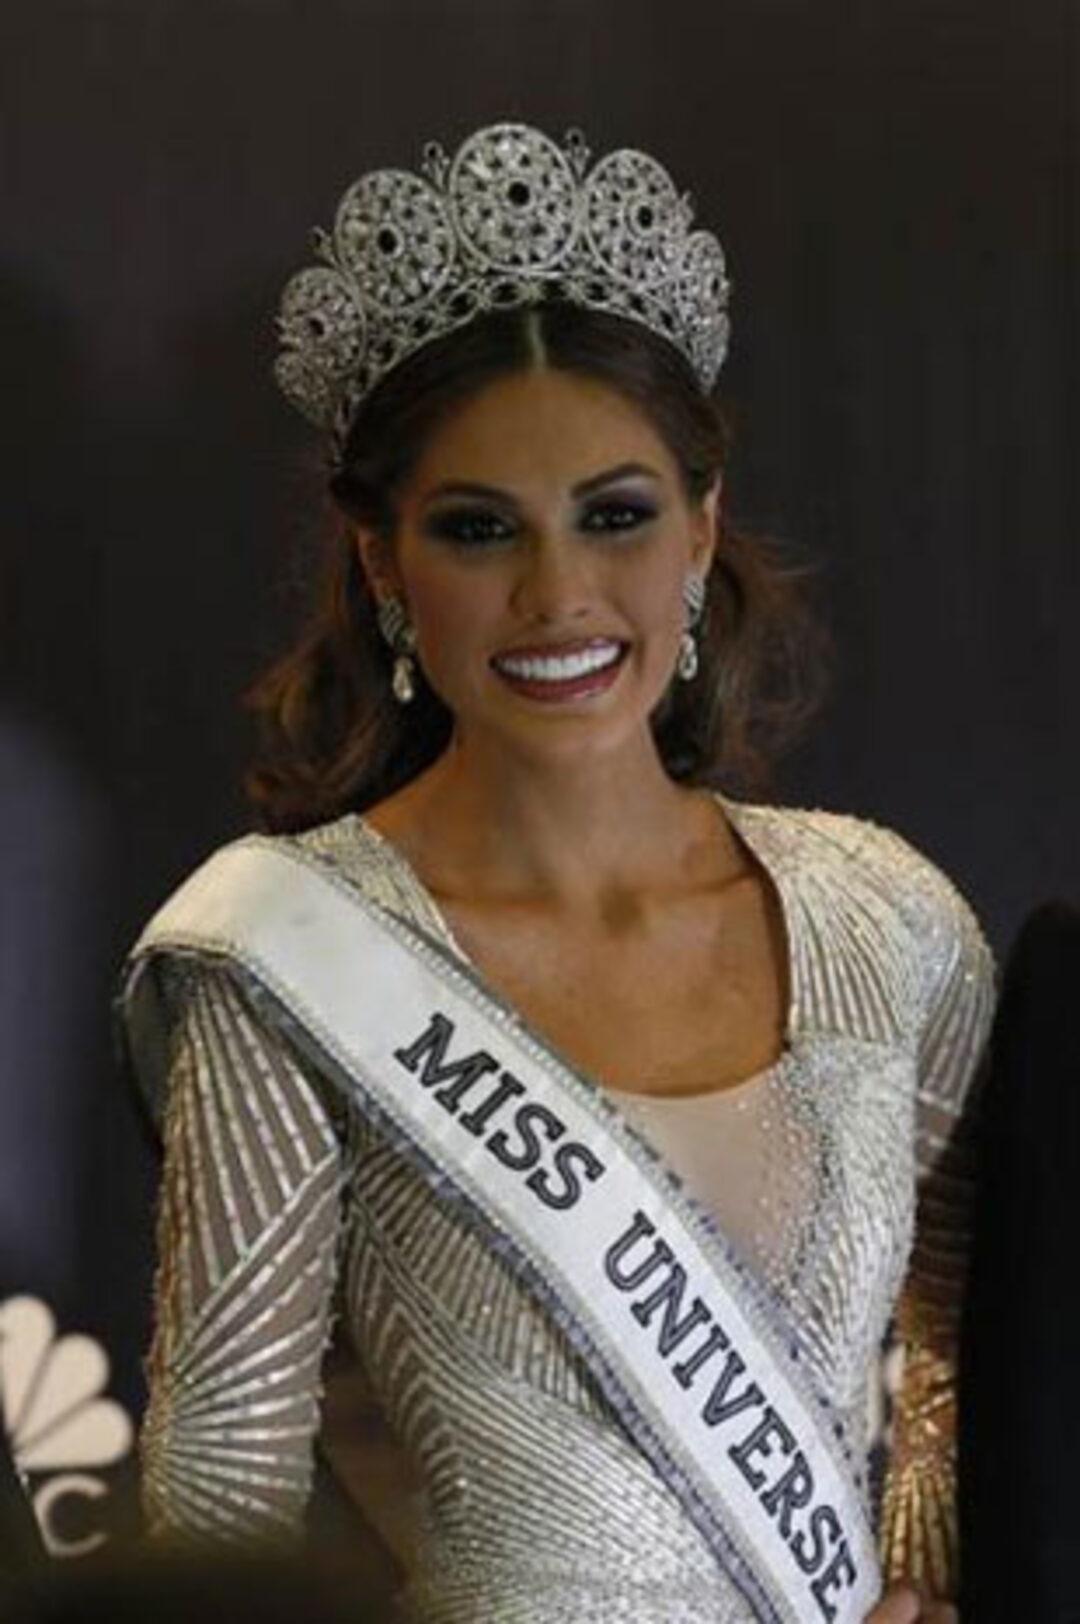 Miss. Габриэла Ислер. Мисс Венесуэла Габриэла Ислер. «Мисс Вселенная 2013»: Габриэла Ислер. Мария Габриэла Ислер Мисс Вселенная.